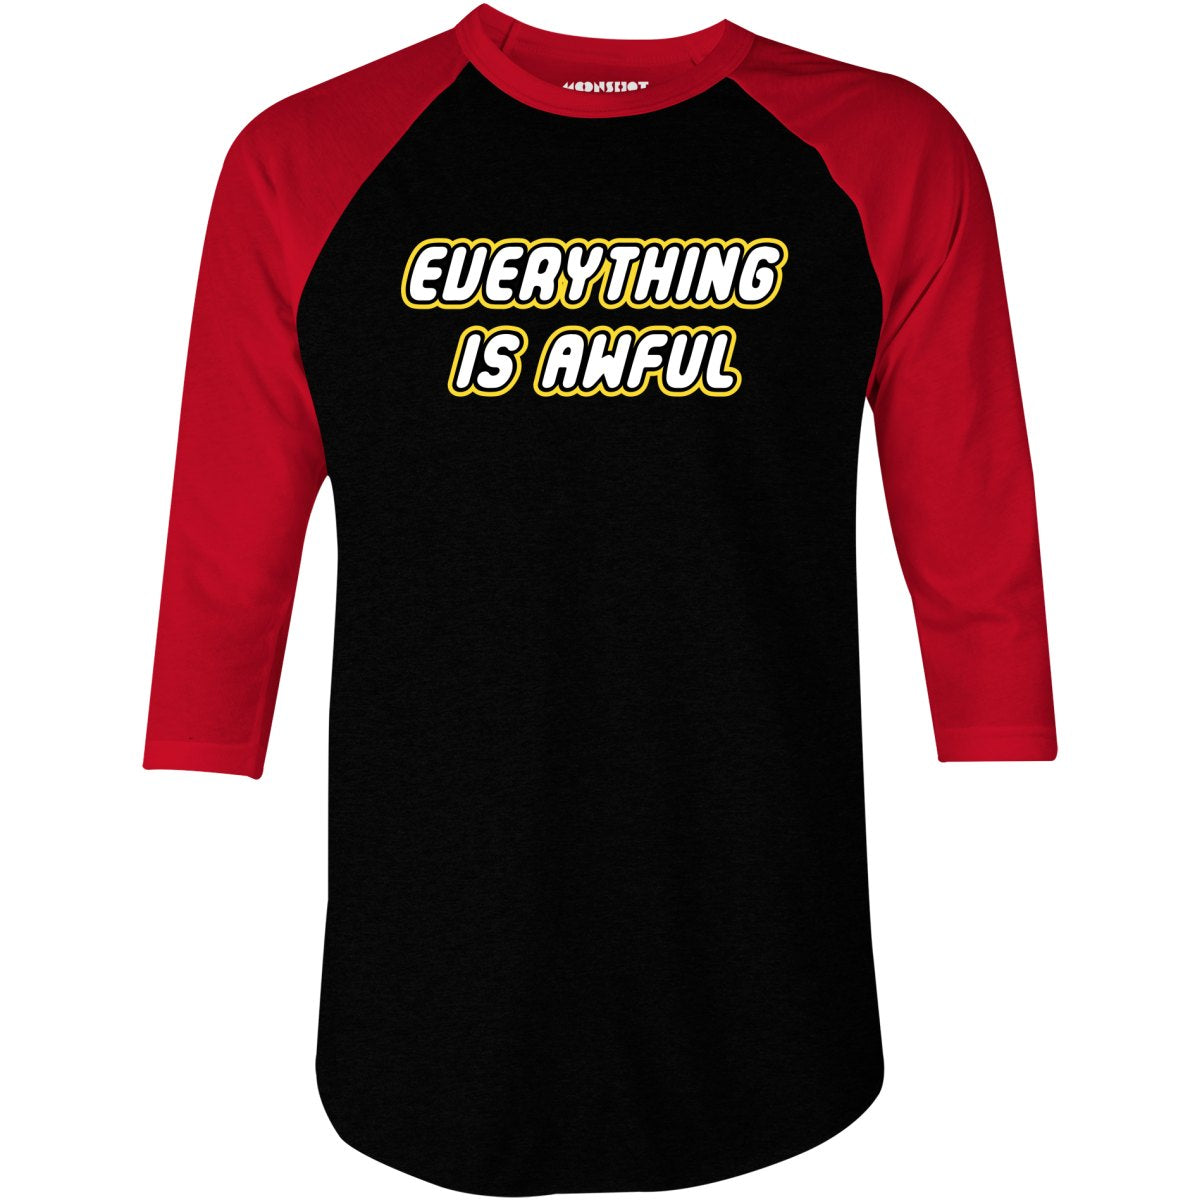 Everything is Awful - 3/4 Sleeve Raglan T-Shirt